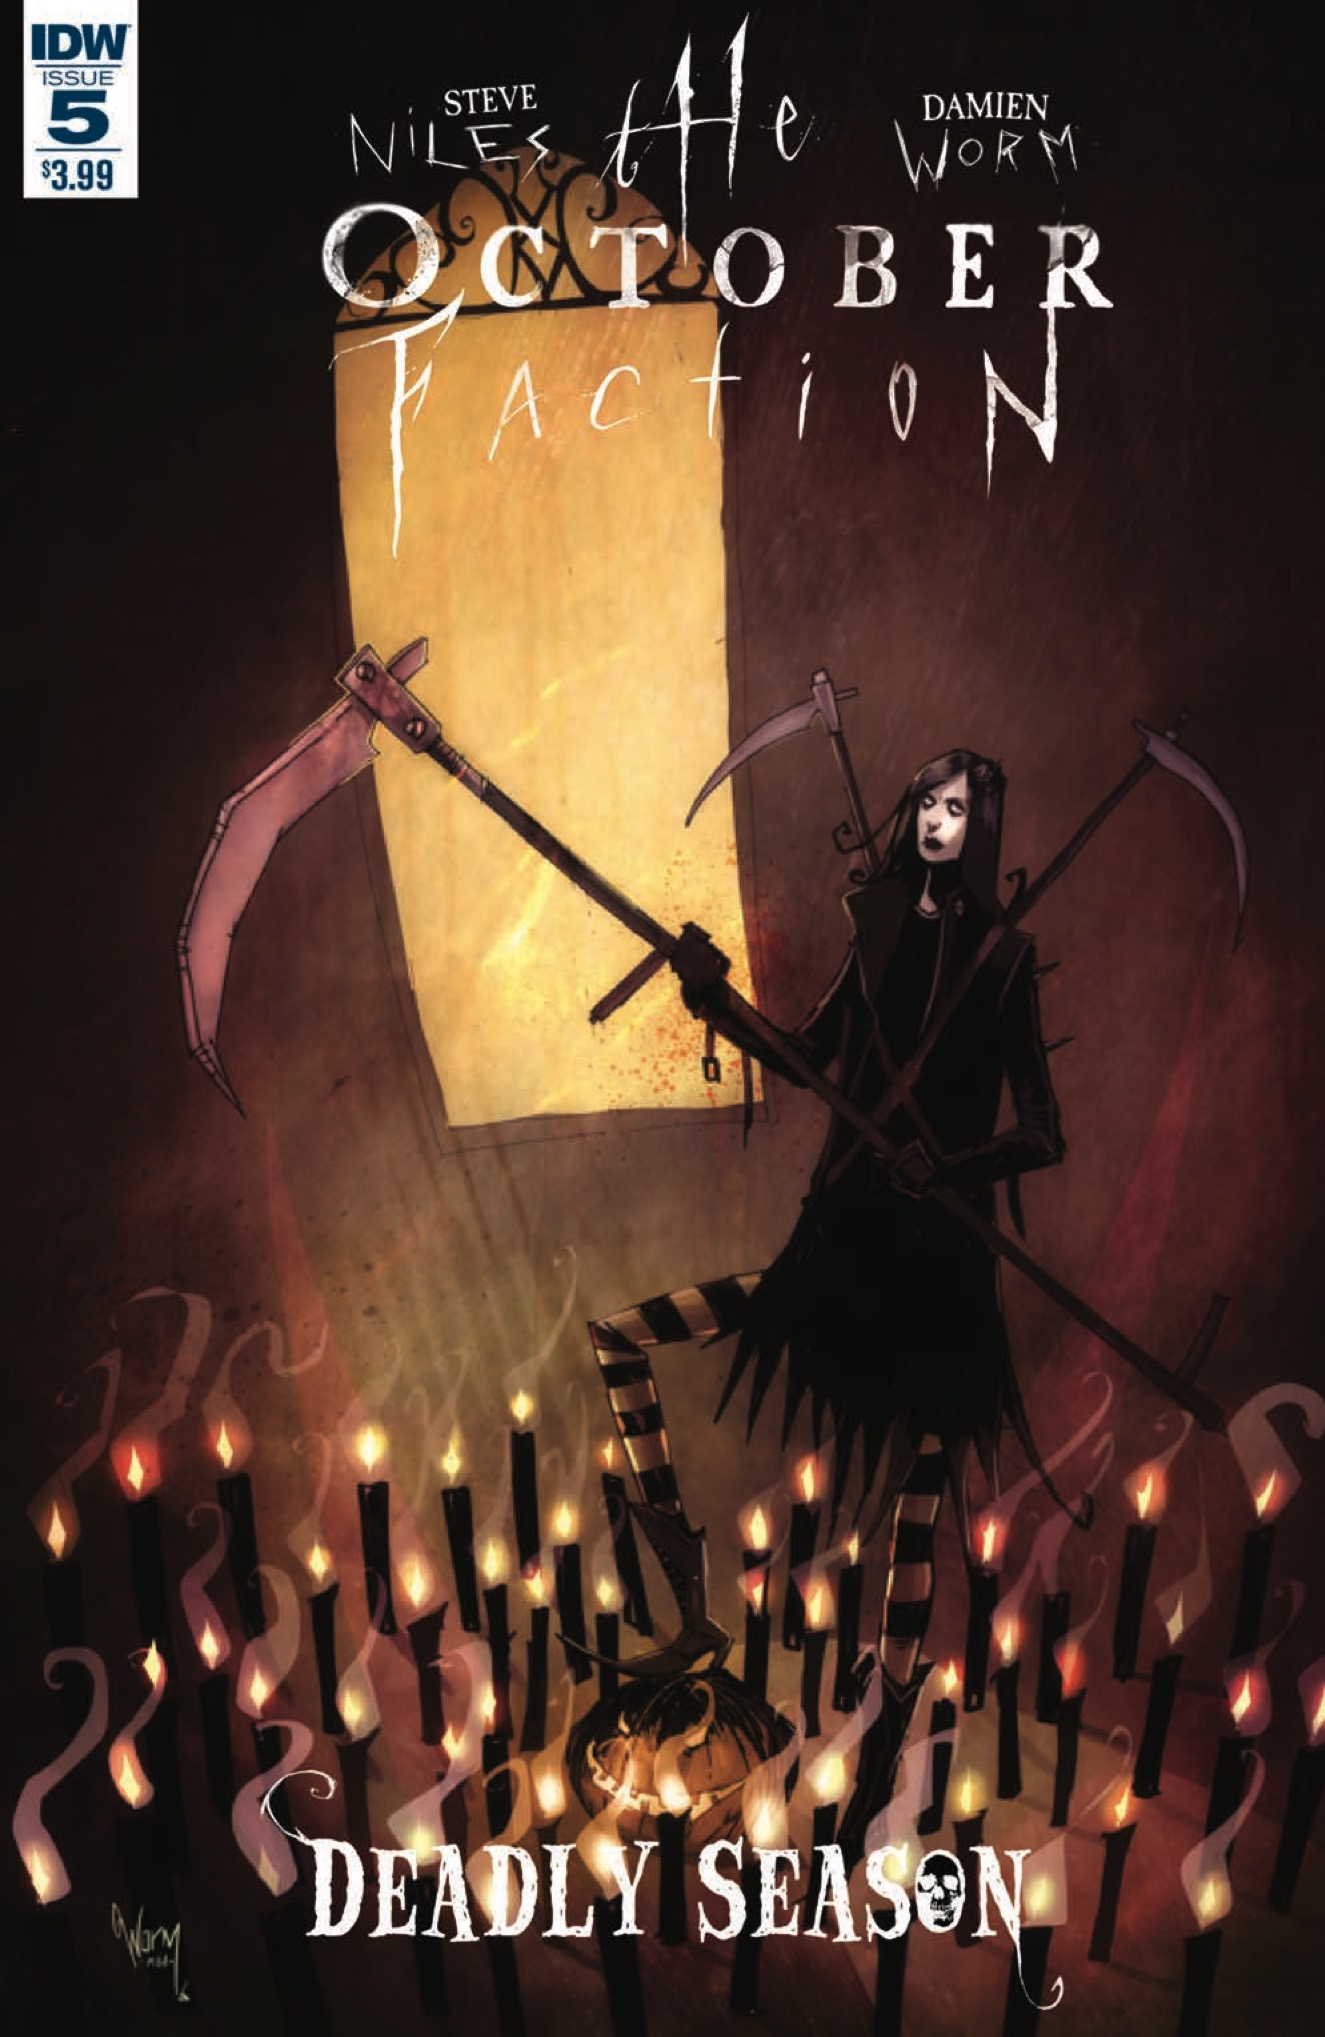 [EXCLUSIVE] IDW Preview: October Faction Deadly Season #5